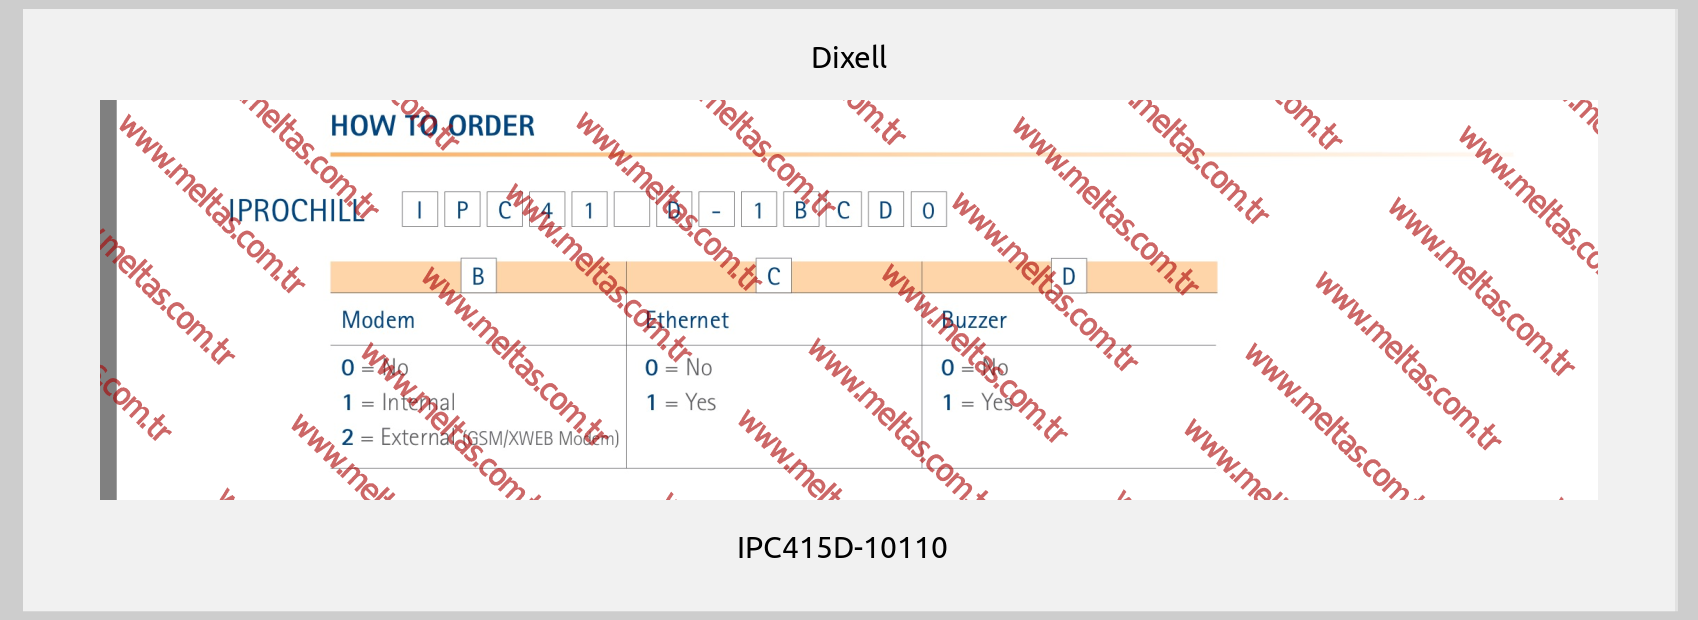 Dixell - IPC415D-10110  